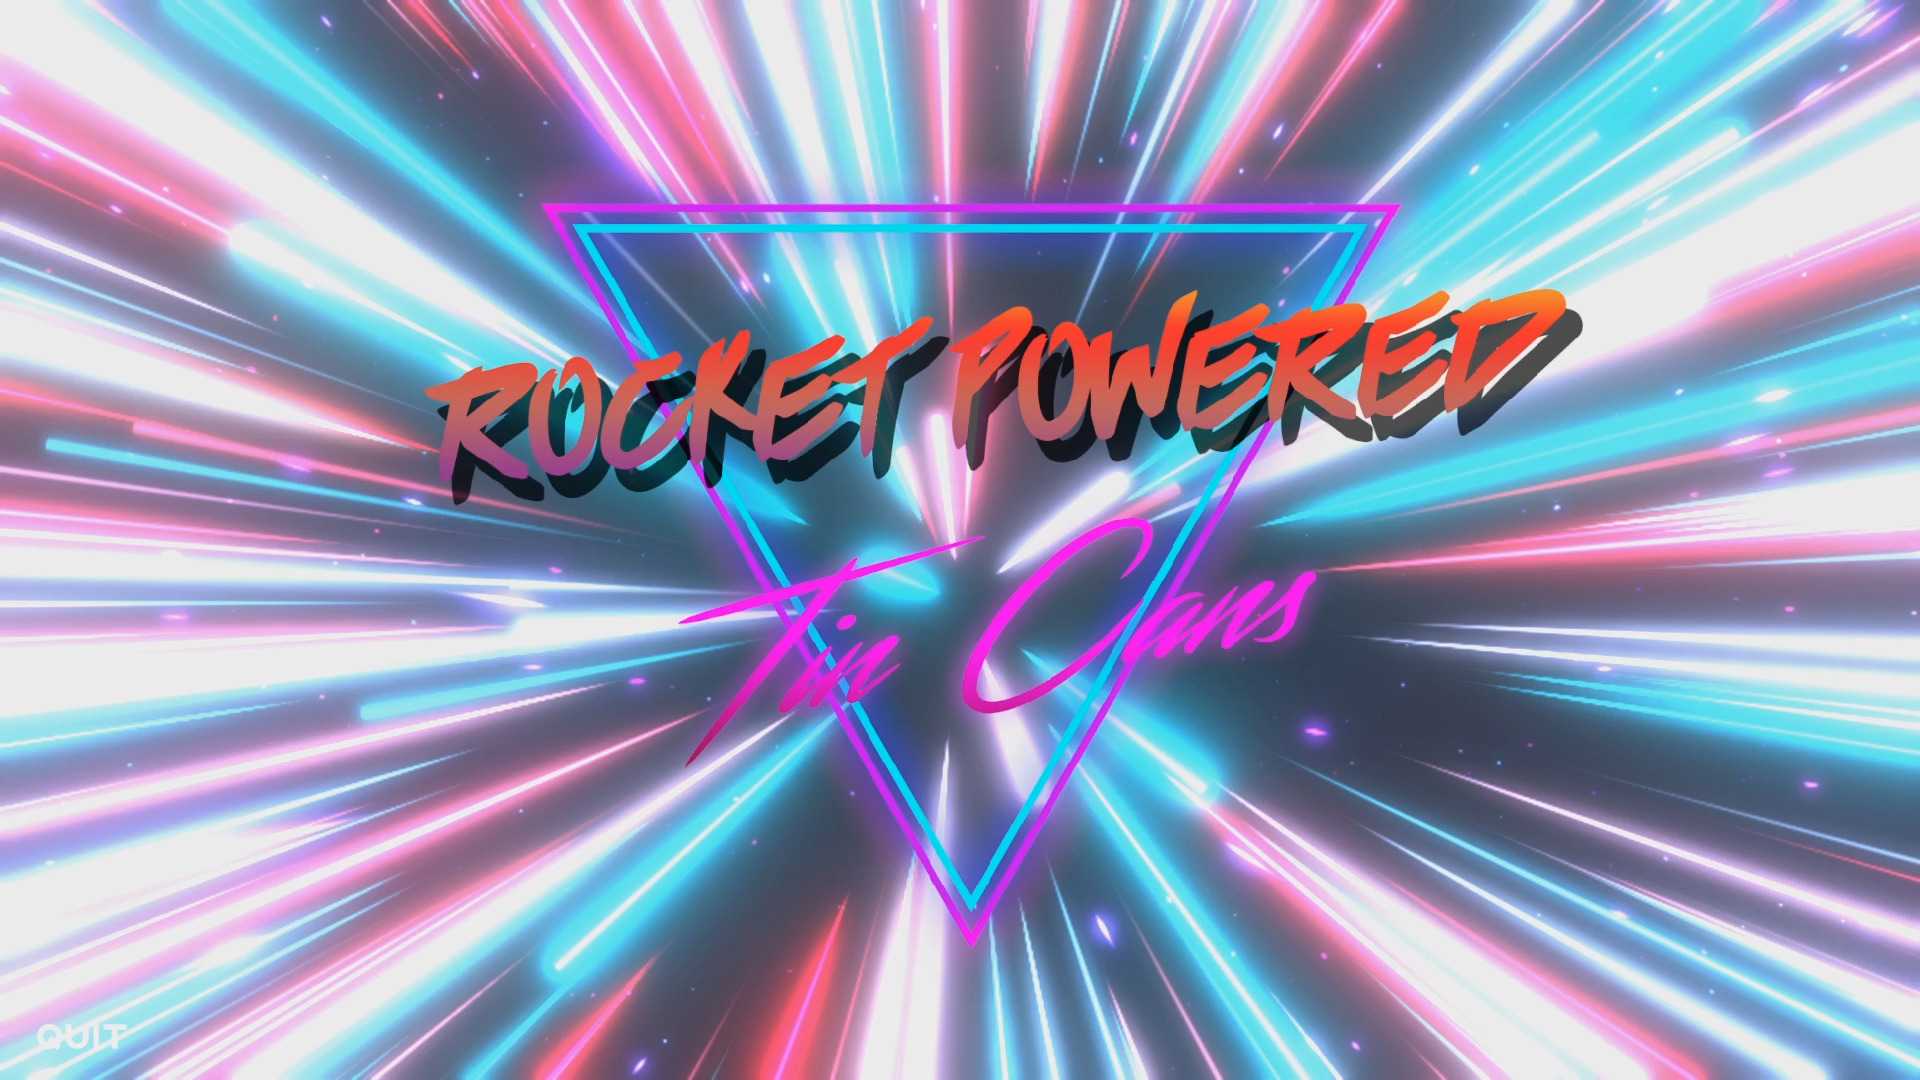 Rocket Powered Tin Cans by Ben Luker, ZaneZukovsky for GMTK Game Jam ...